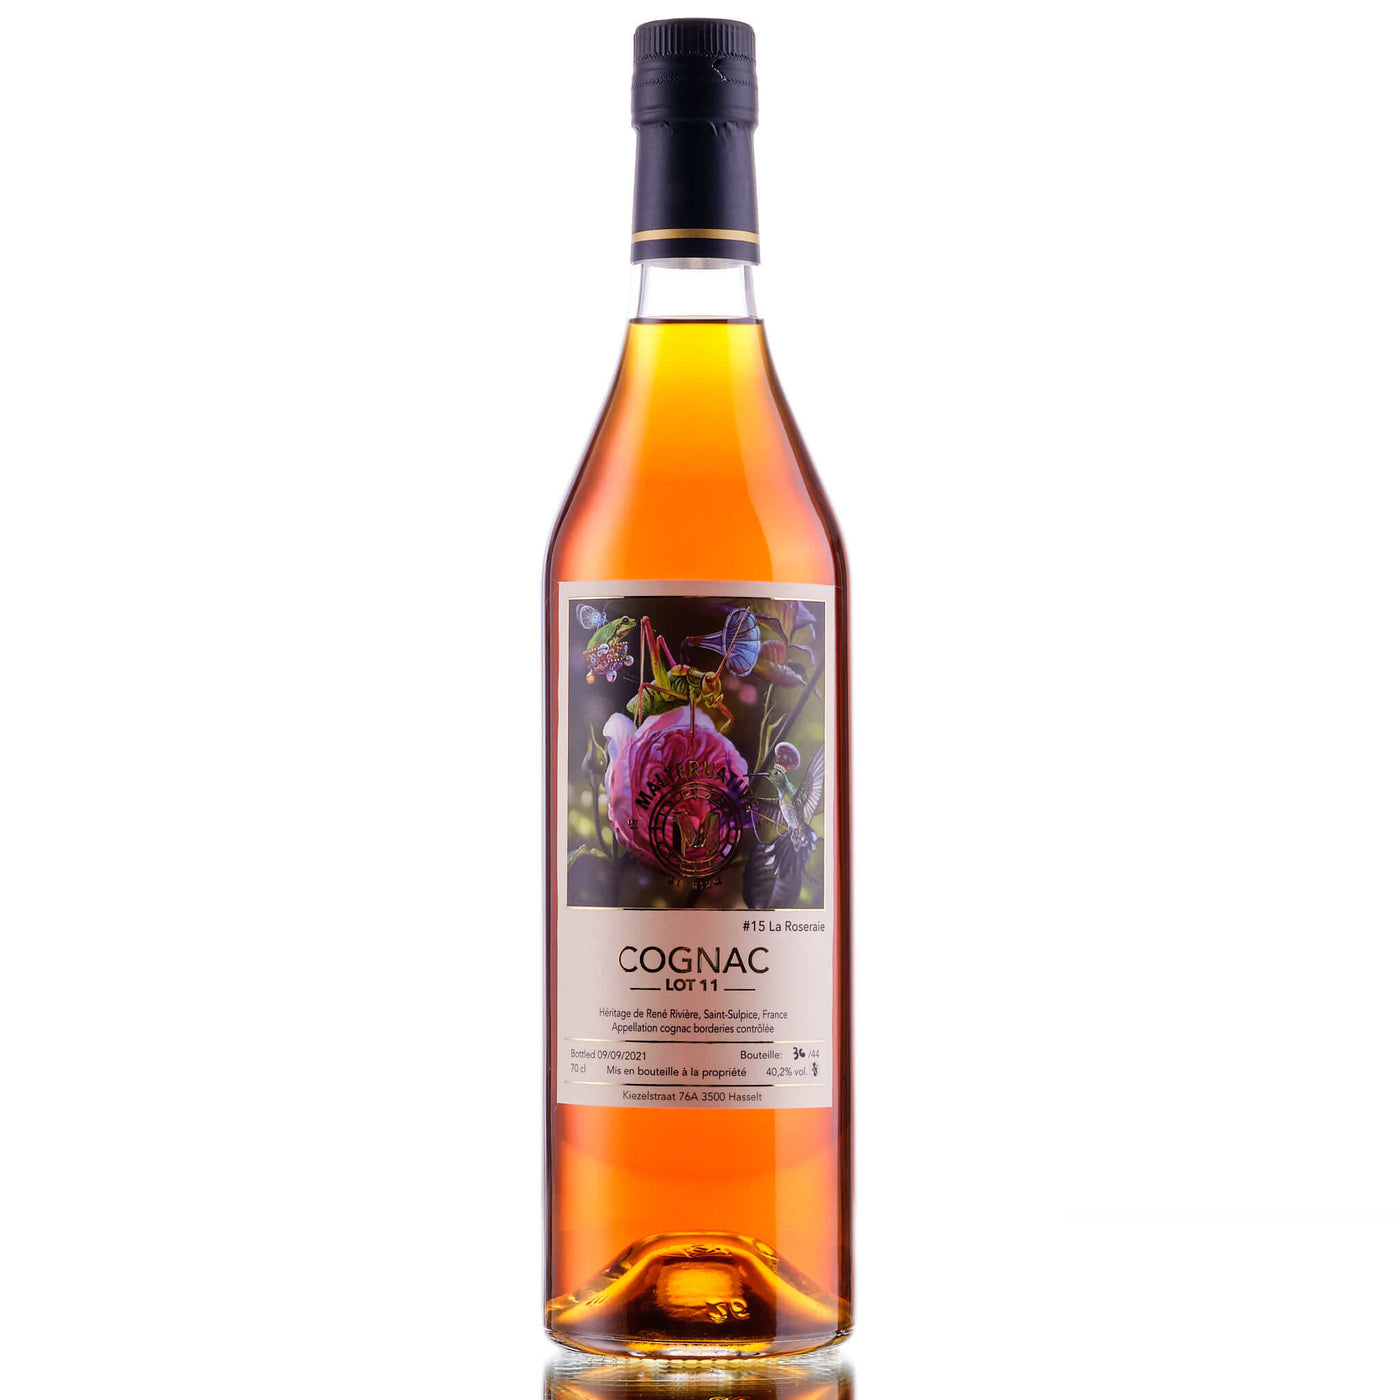 Malternative Belgium Cognac #15 La Roseraie (Lot 11)